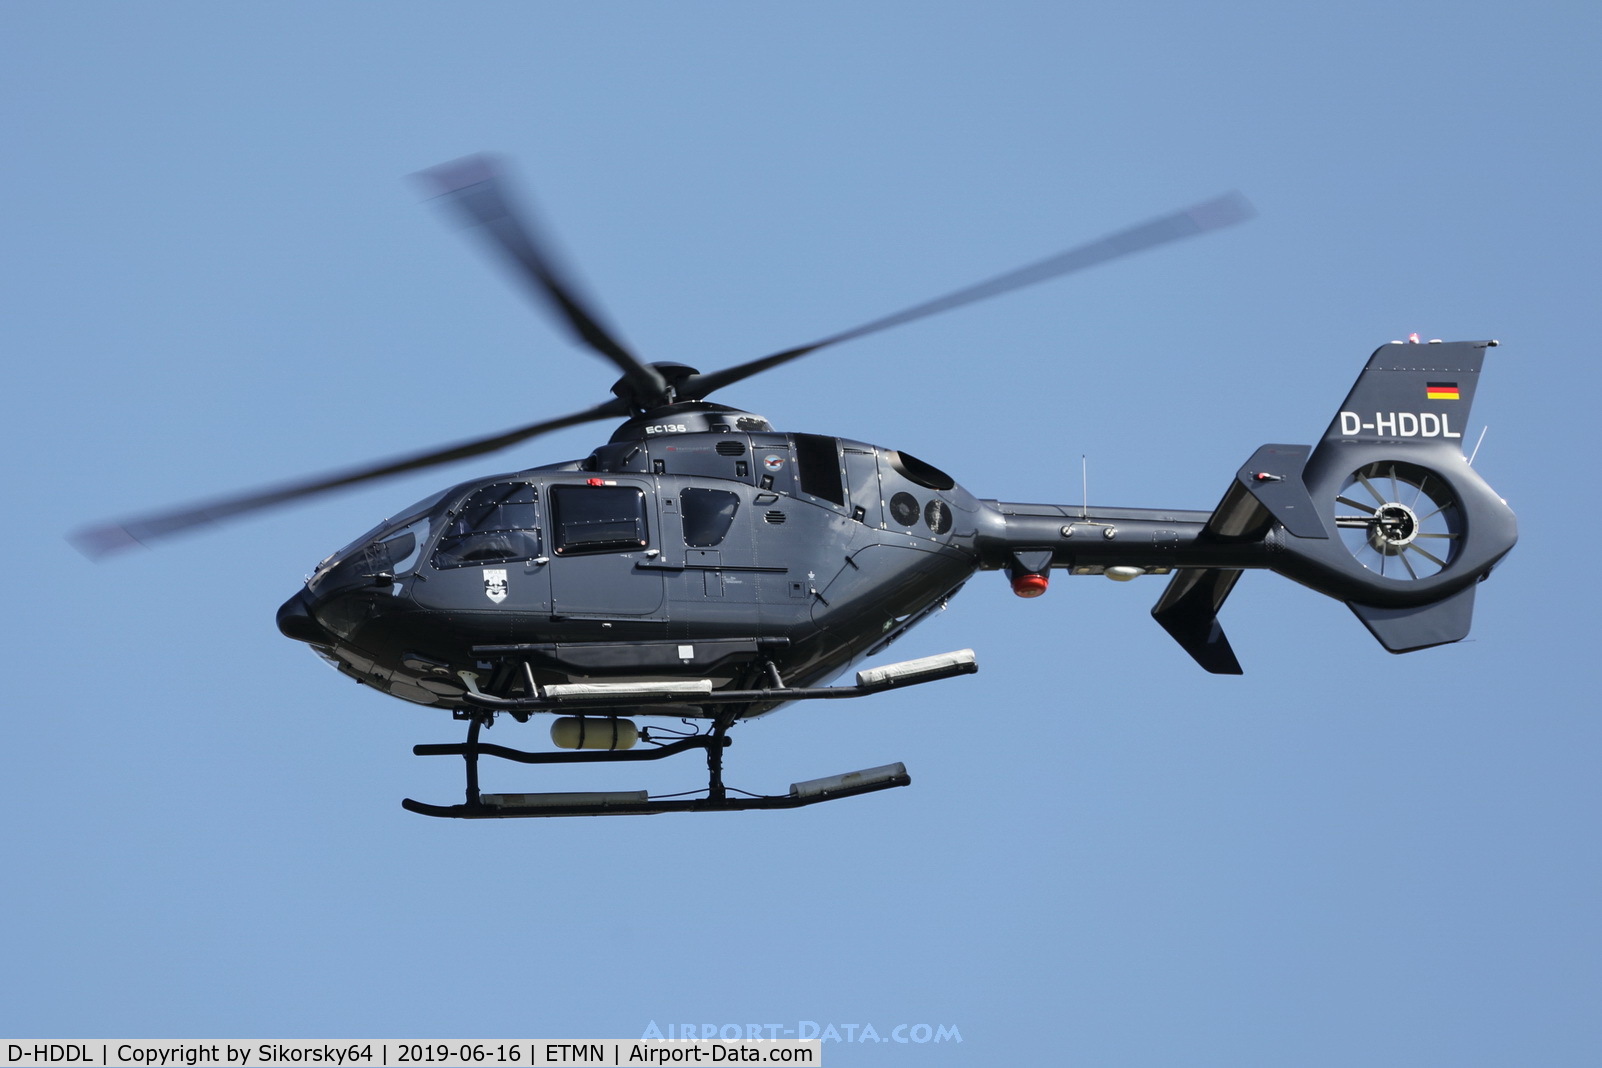 D-HDDL, 2015 Eurocopter EC-135P2+ C/N 1200, Take off at Nordholz Marinestützpunkt, Germany